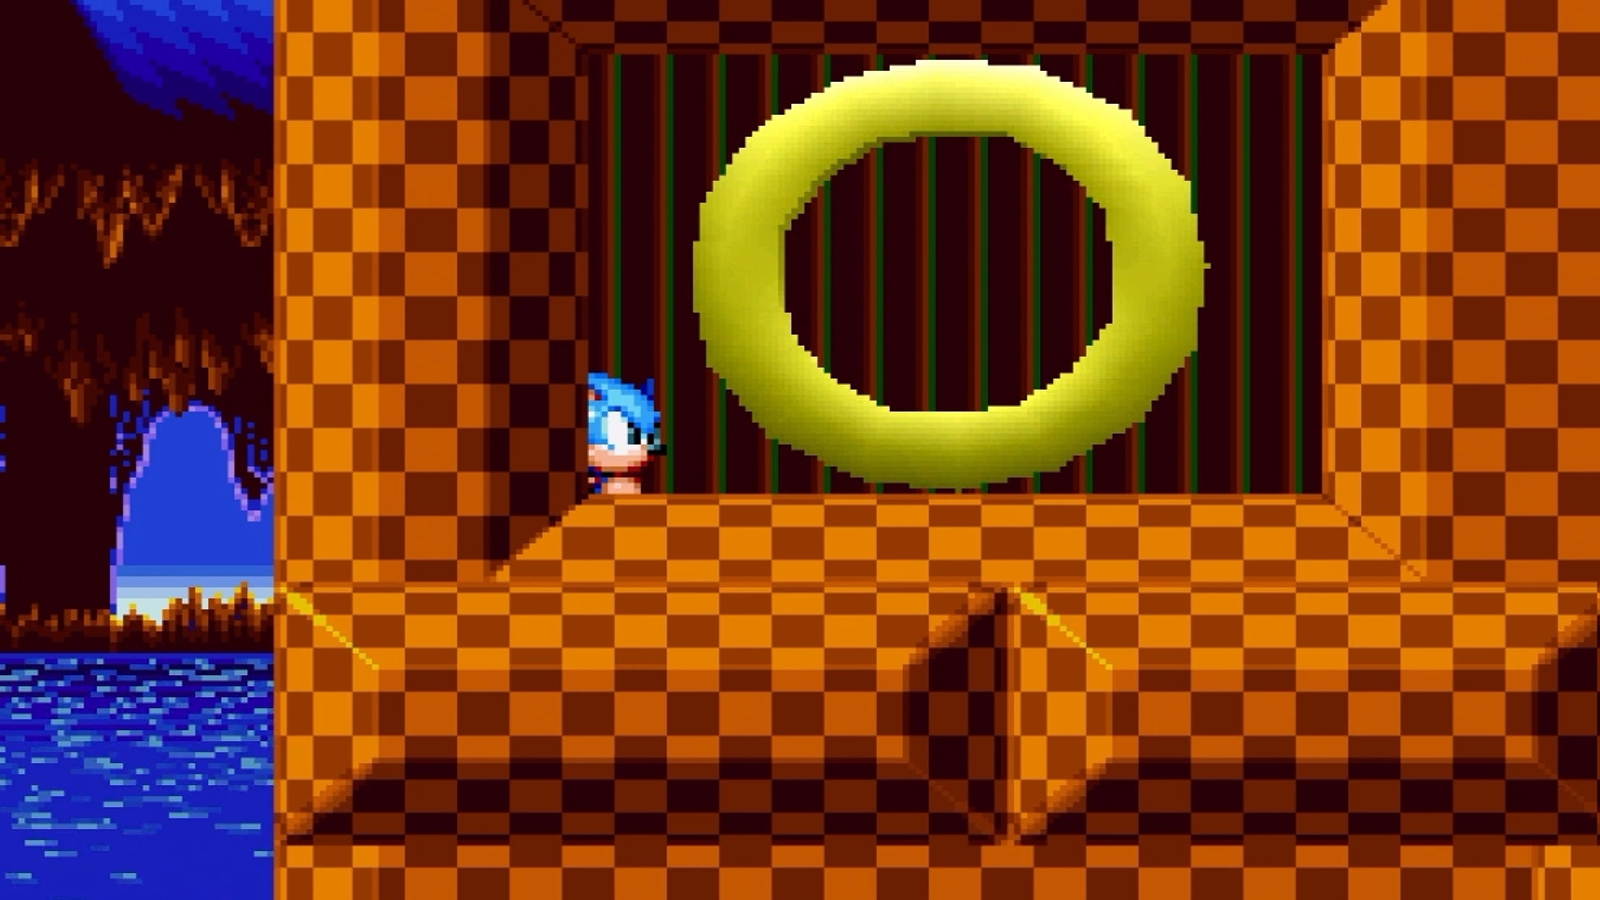 Sonic Chaos Emeralds, Sonic Emerald Ring